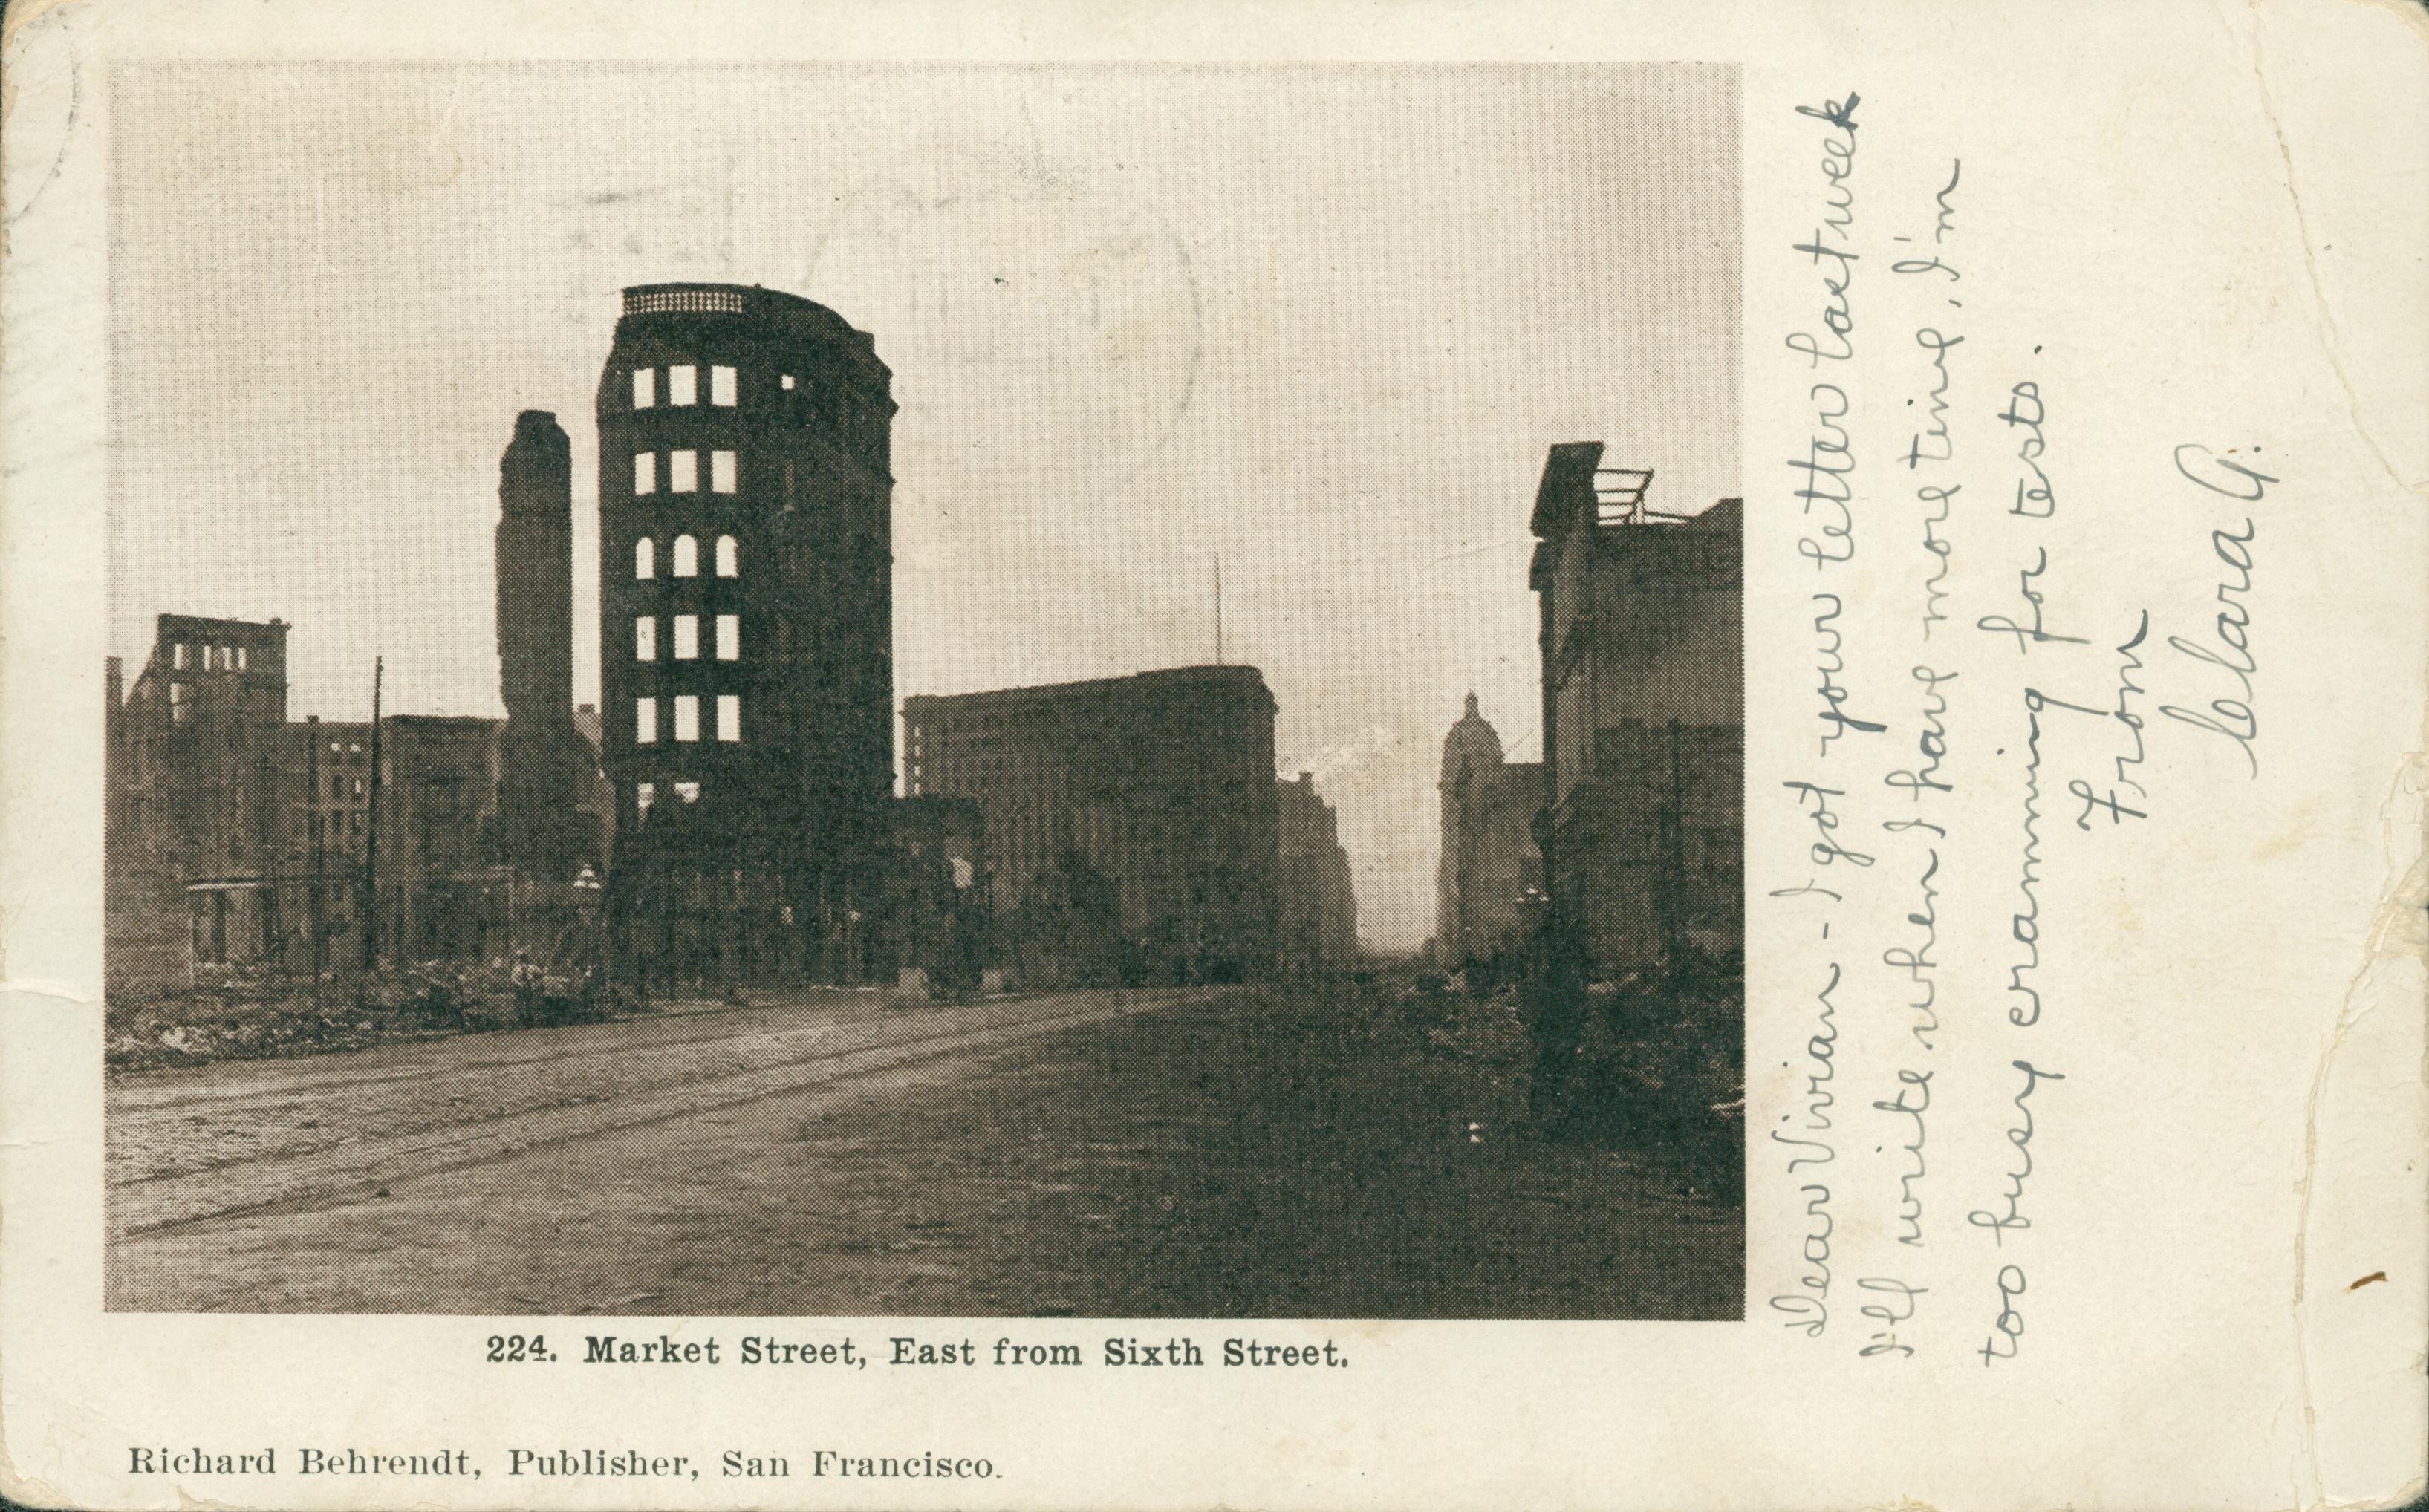 Shows destroyed buildings along Market Street.